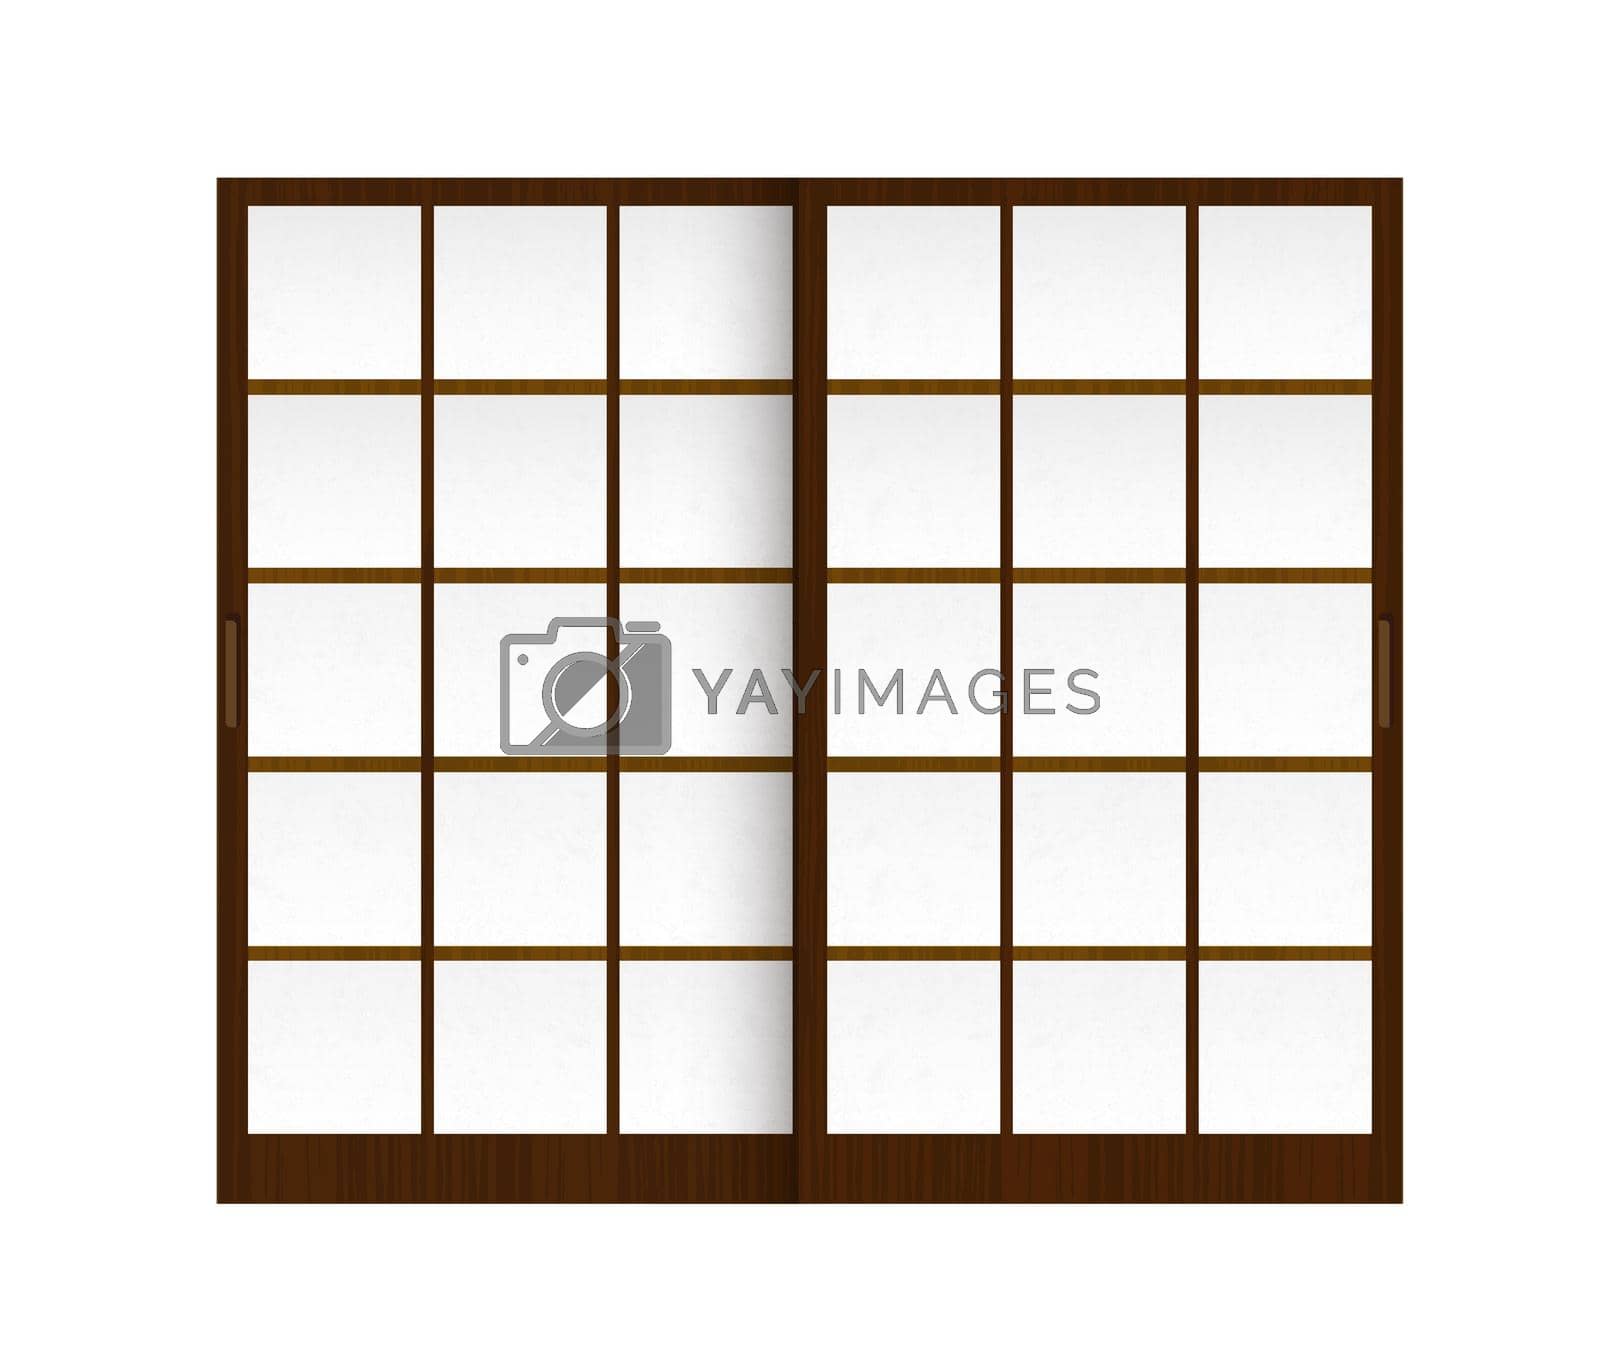 Royalty free image of Shoji ( japanese traditional doorwindow ) vector illustration by barks